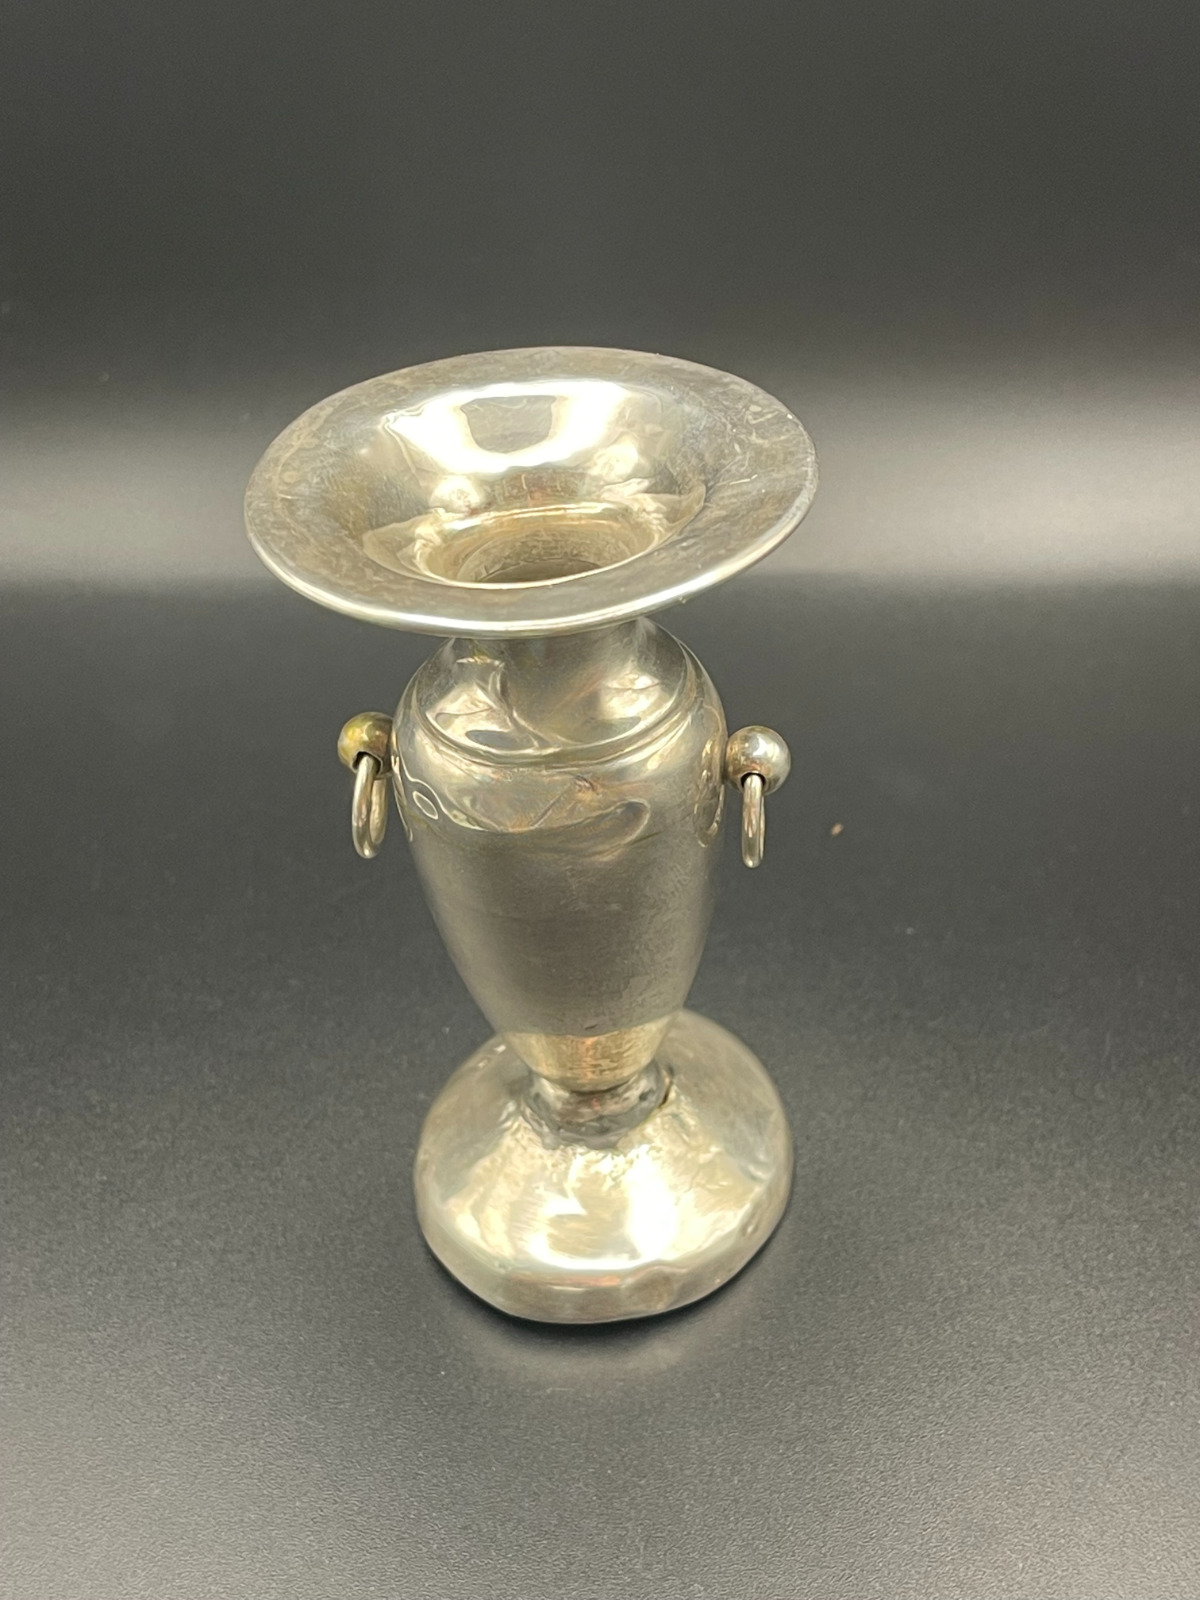 Antique Sterling Silver Vase: Birmingham 1912 (Fair Condition)